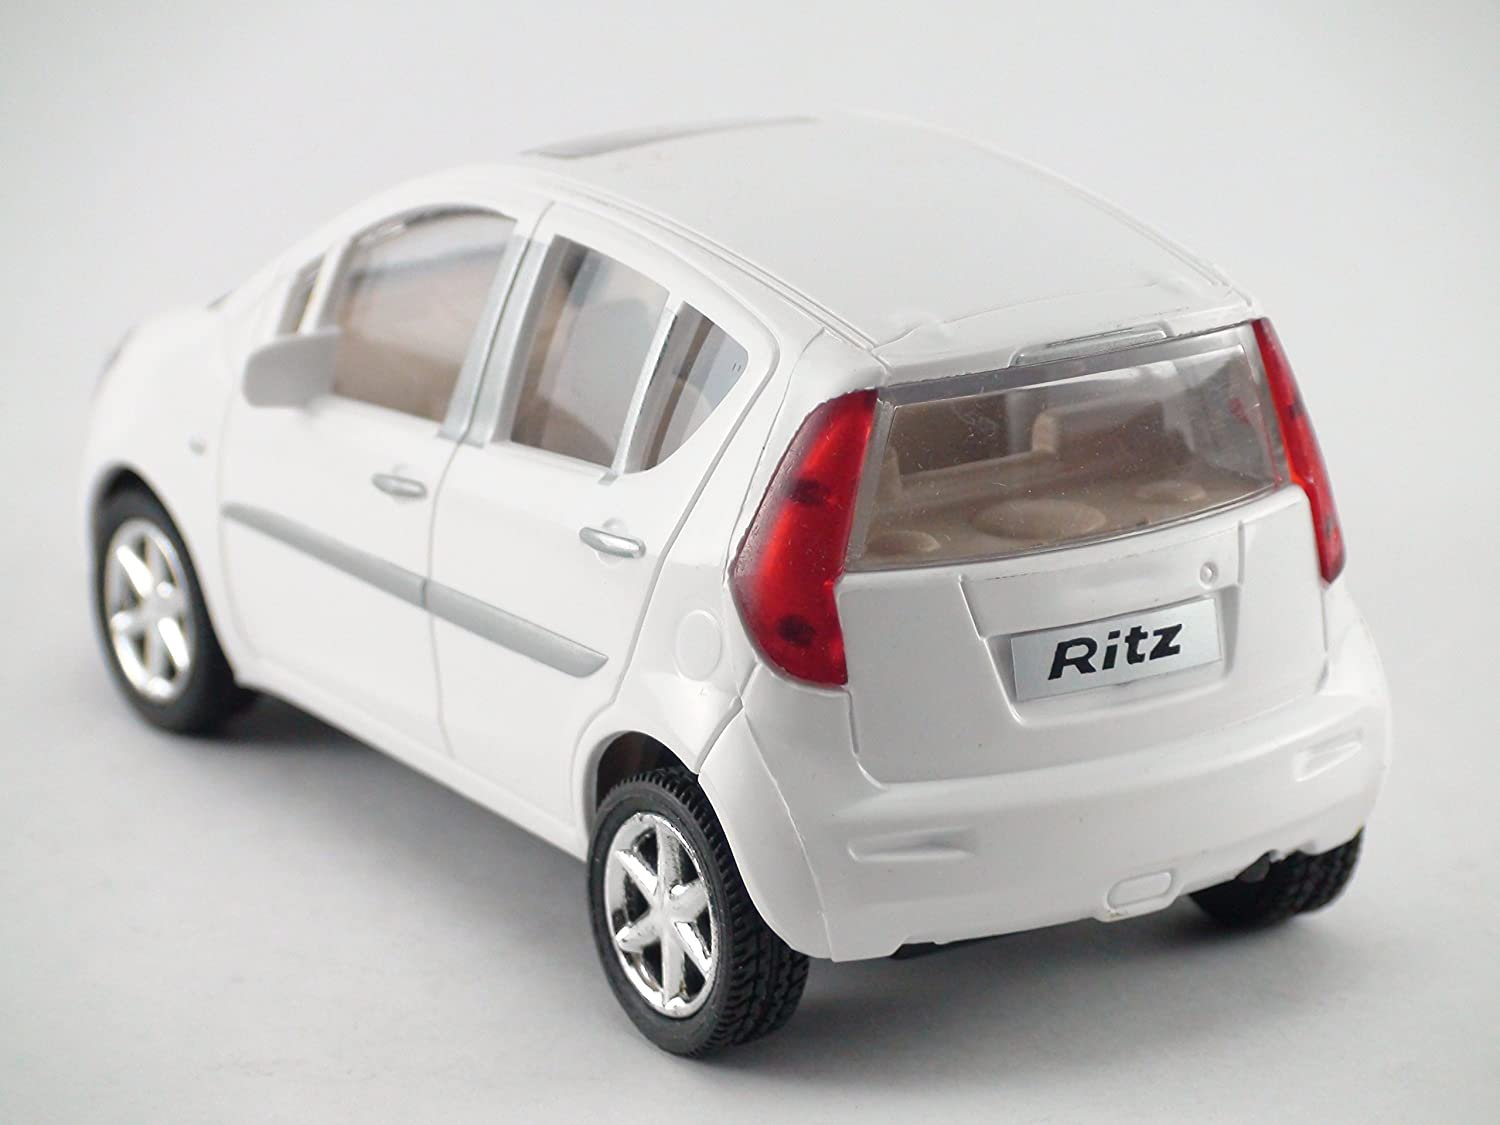 Ritz Model Toy Car White Color (Centy Toys)